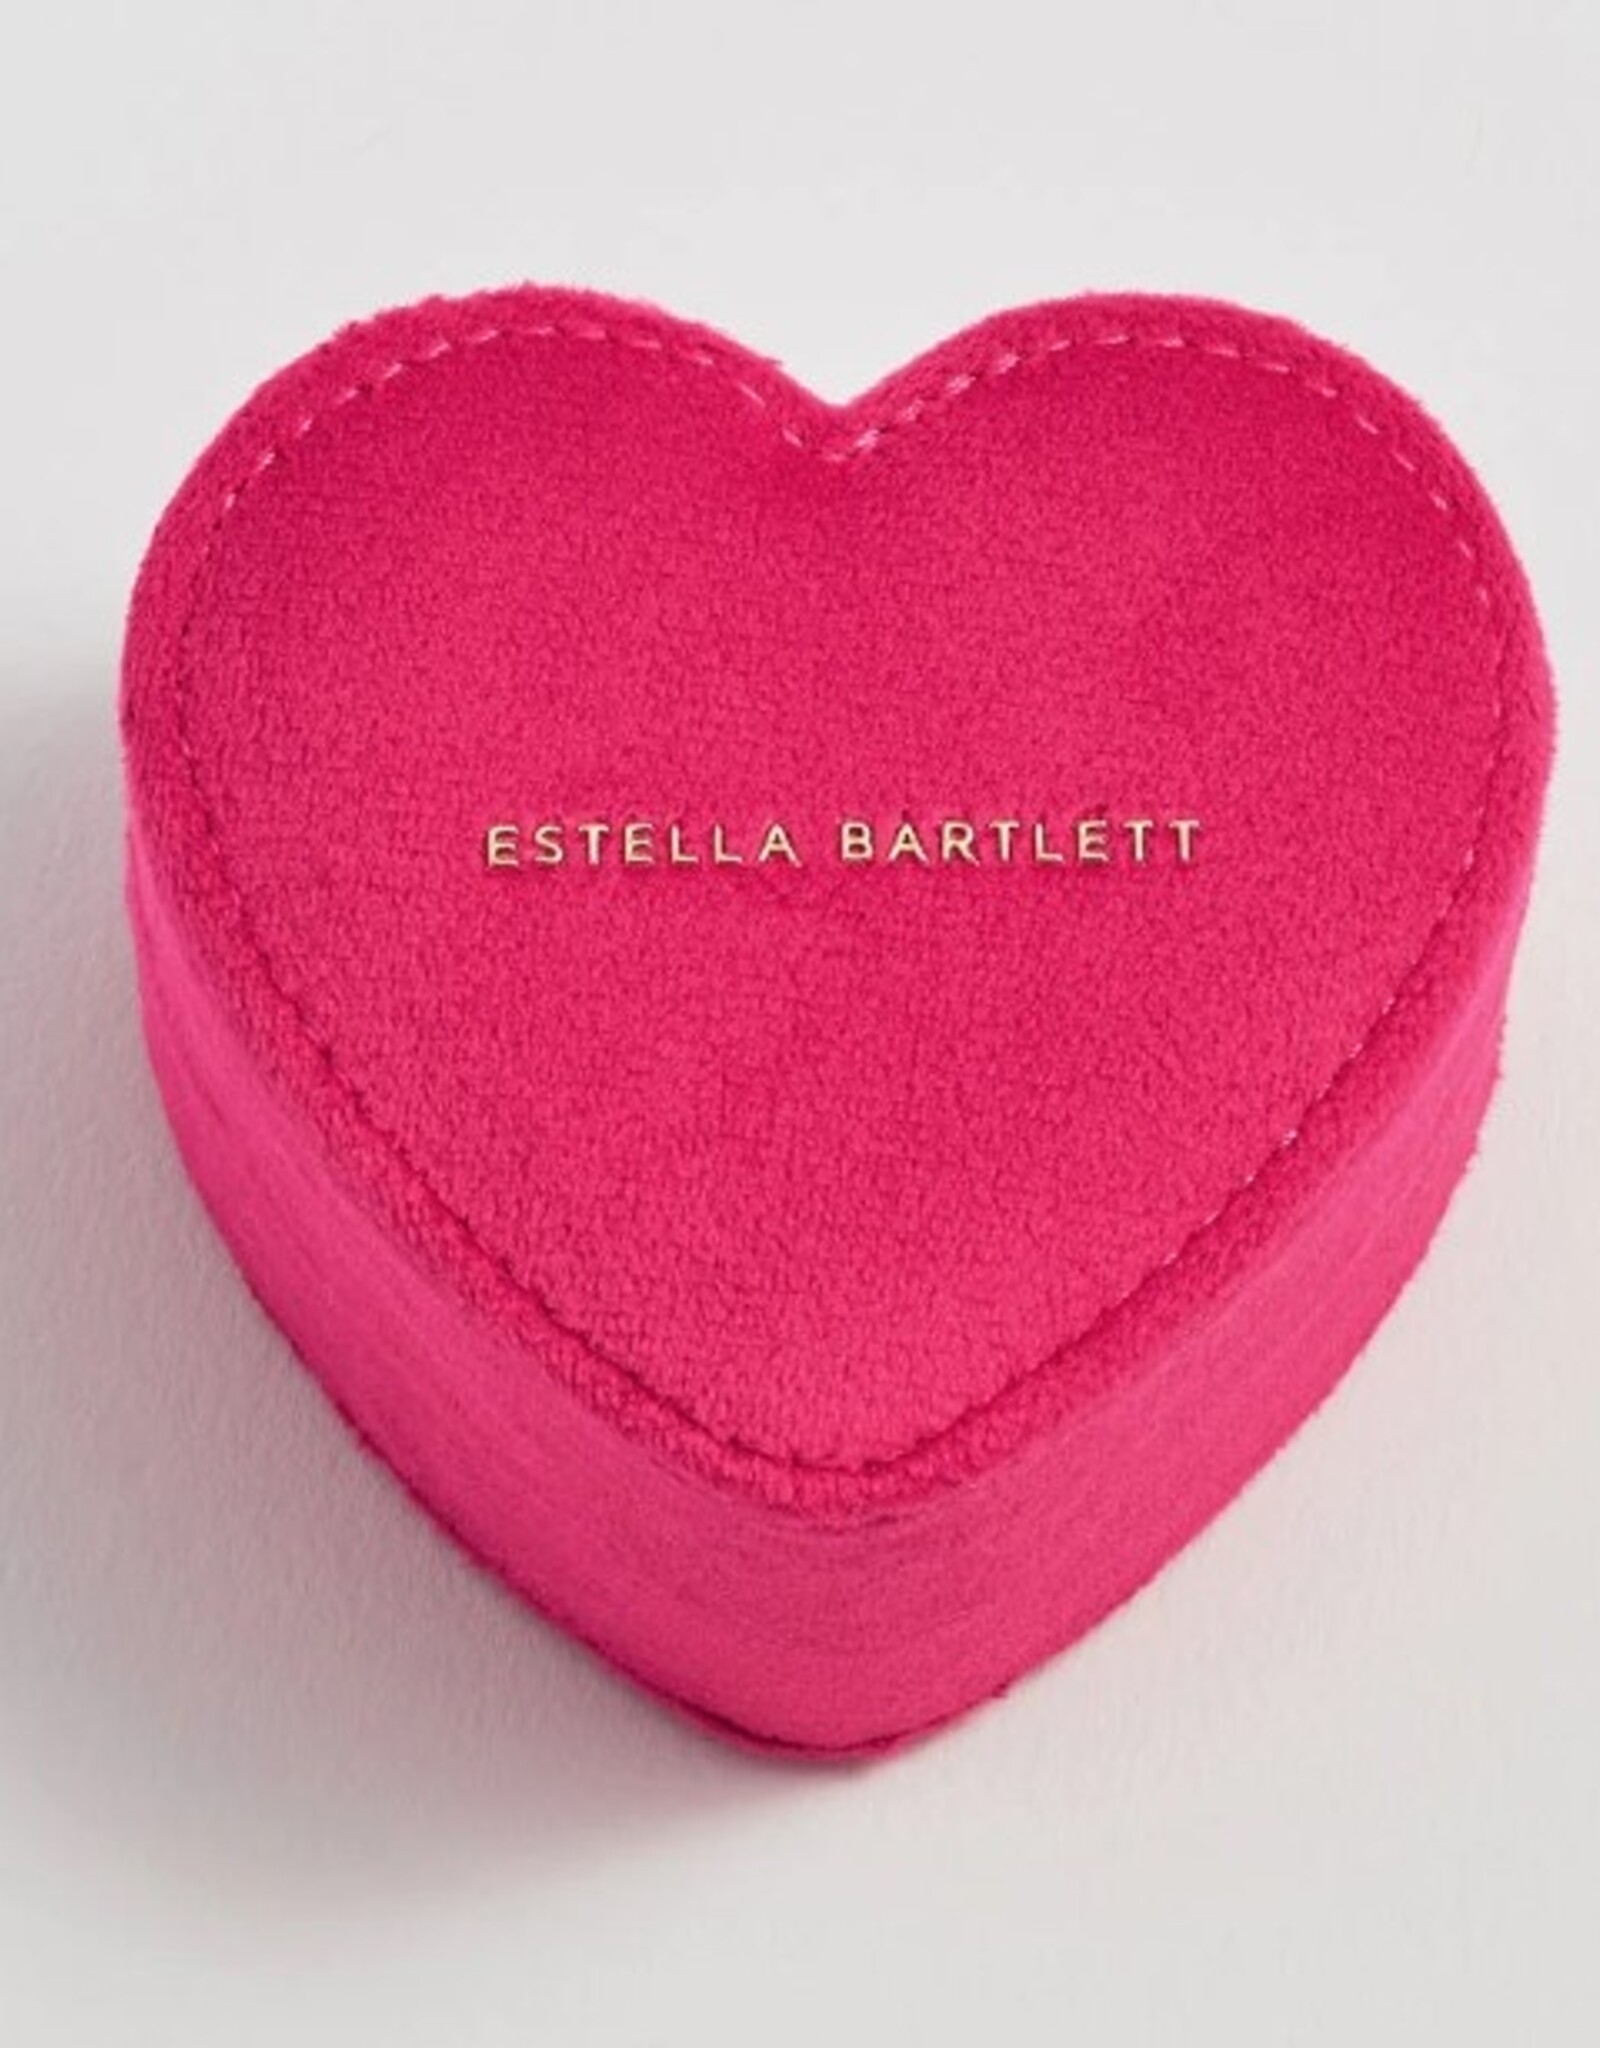 Estella Bartlett Mini Heart Jewelry Box - Hot Pink Velvet